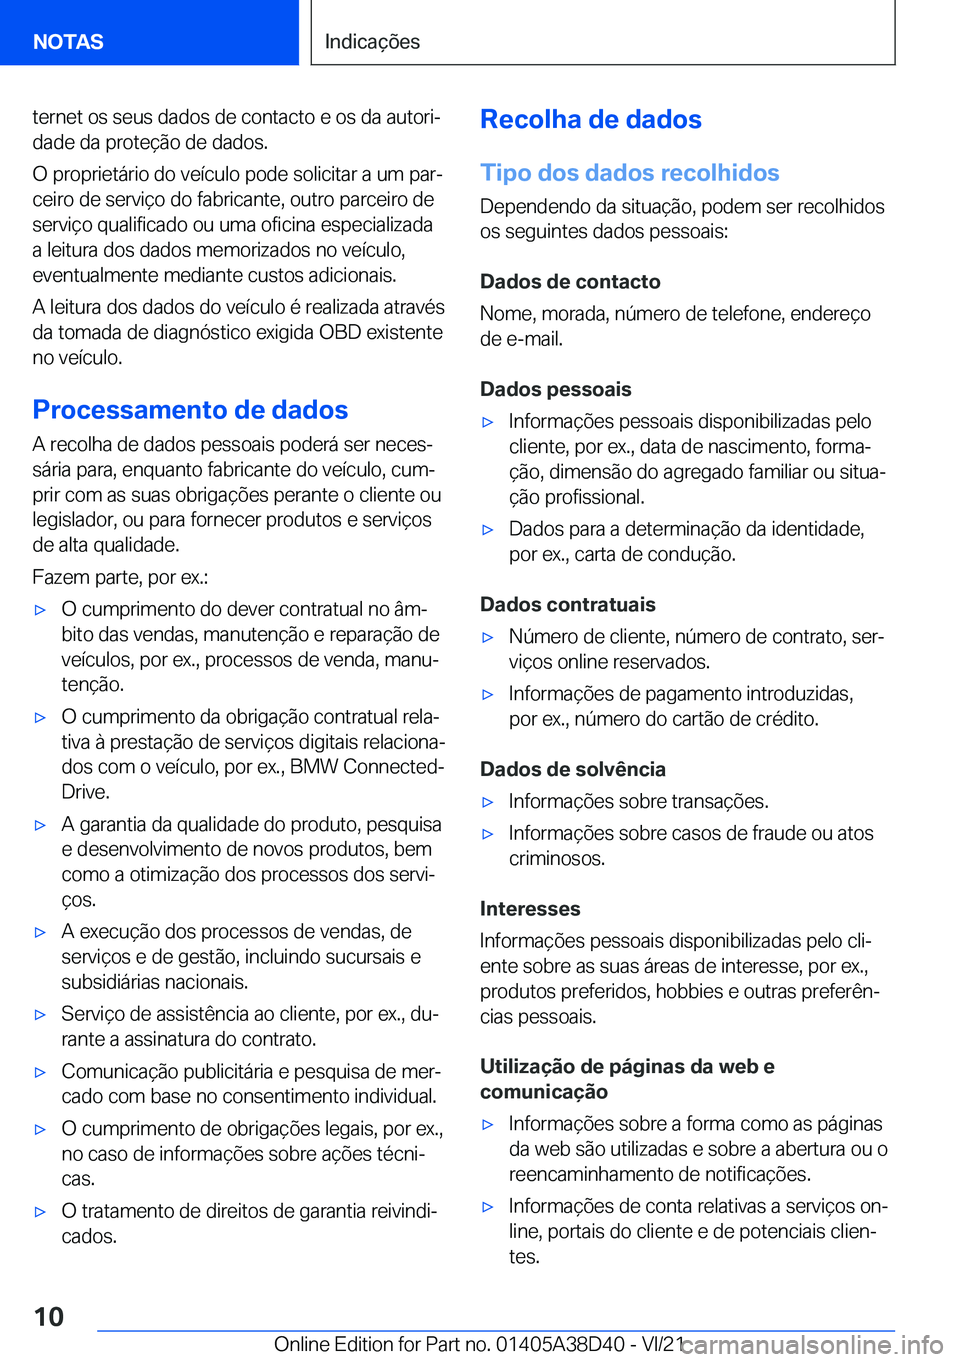 BMW 8 SERIES 2022  Manual do condutor (in Portuguese) �t�e�r�n�e�t��o�s��s�e�u�s��d�a�d�o�s��d�e��c�o�n�t�a�c�t�o��e��o�s��d�a��a�u�t�o�r�iª
�d�a�d�e��d�a��p�r�o�t�e�